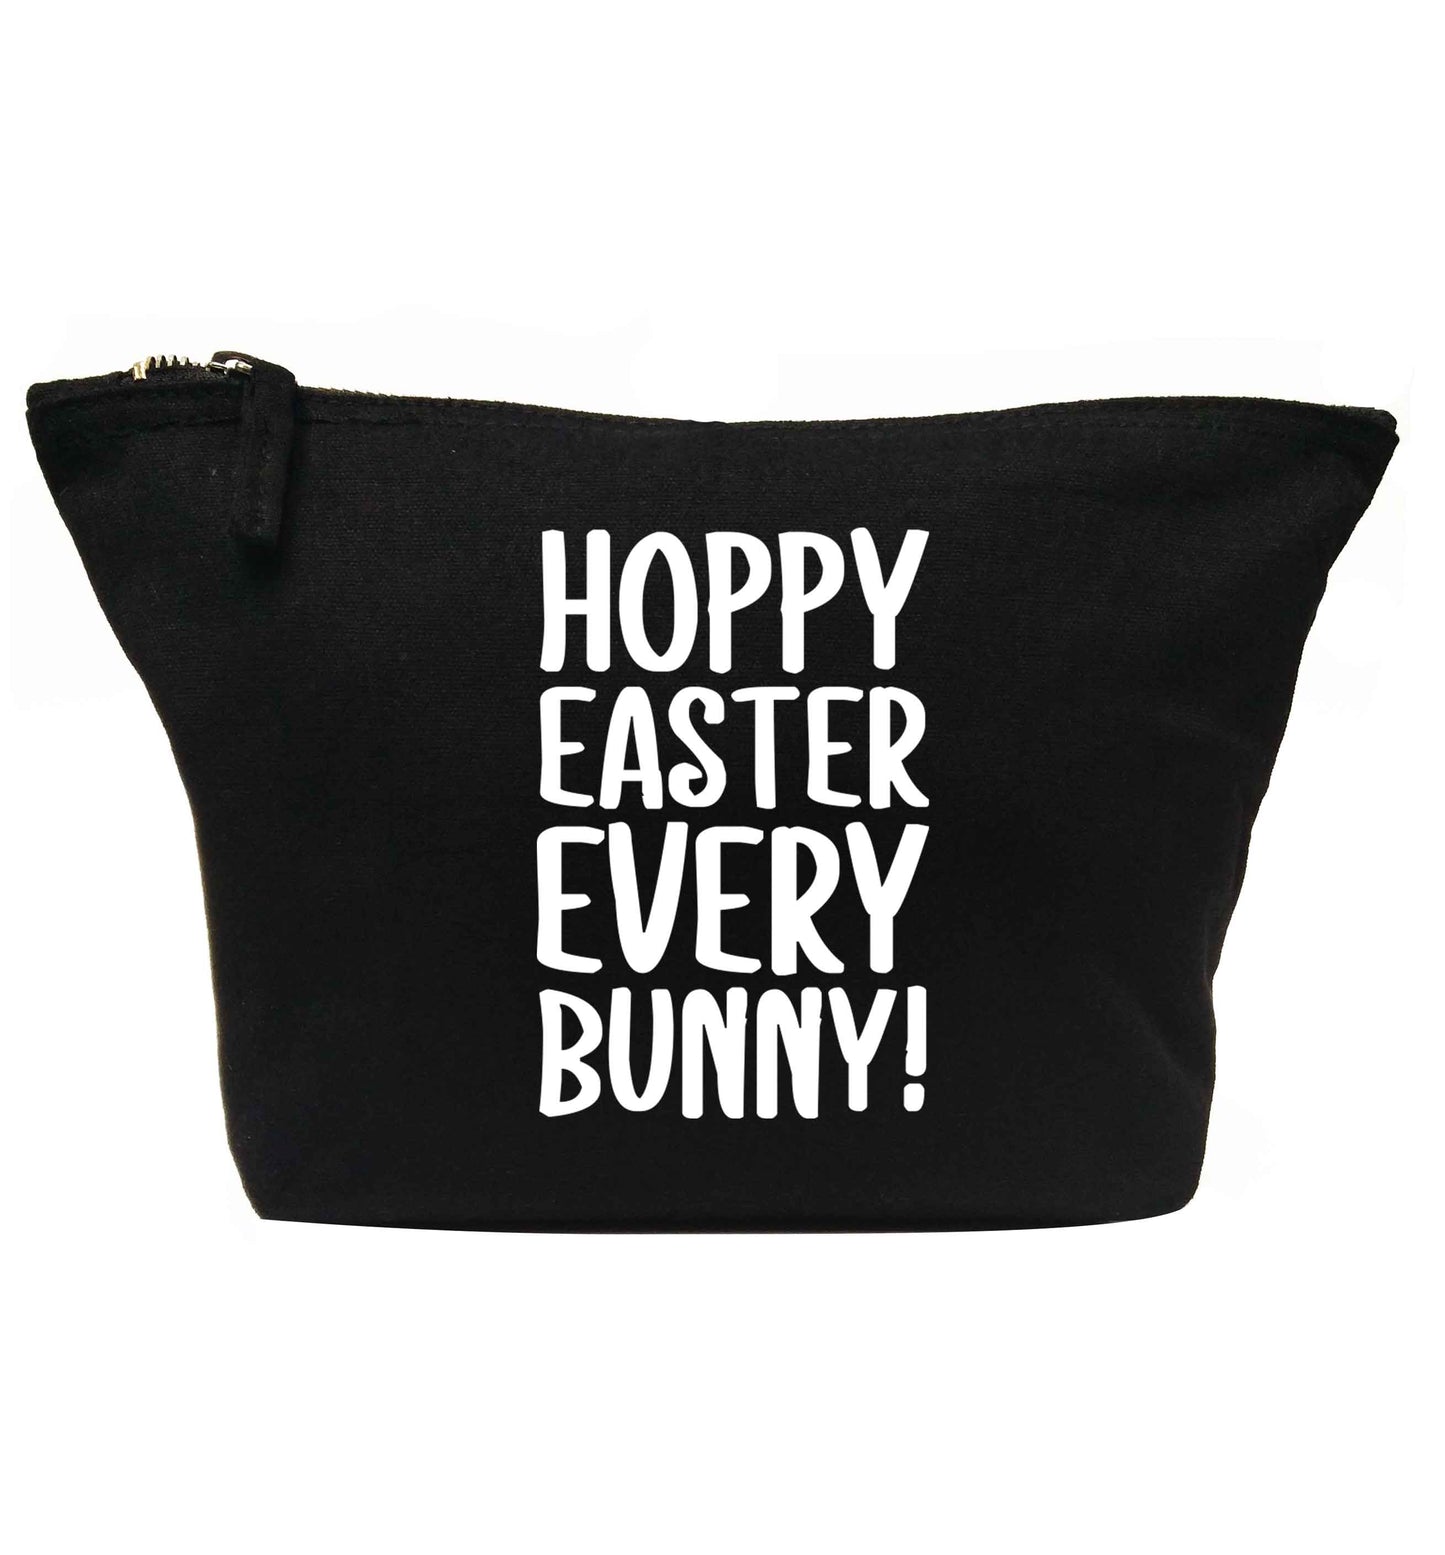 Hoppy Easter every bunny! | Makeup / wash bag